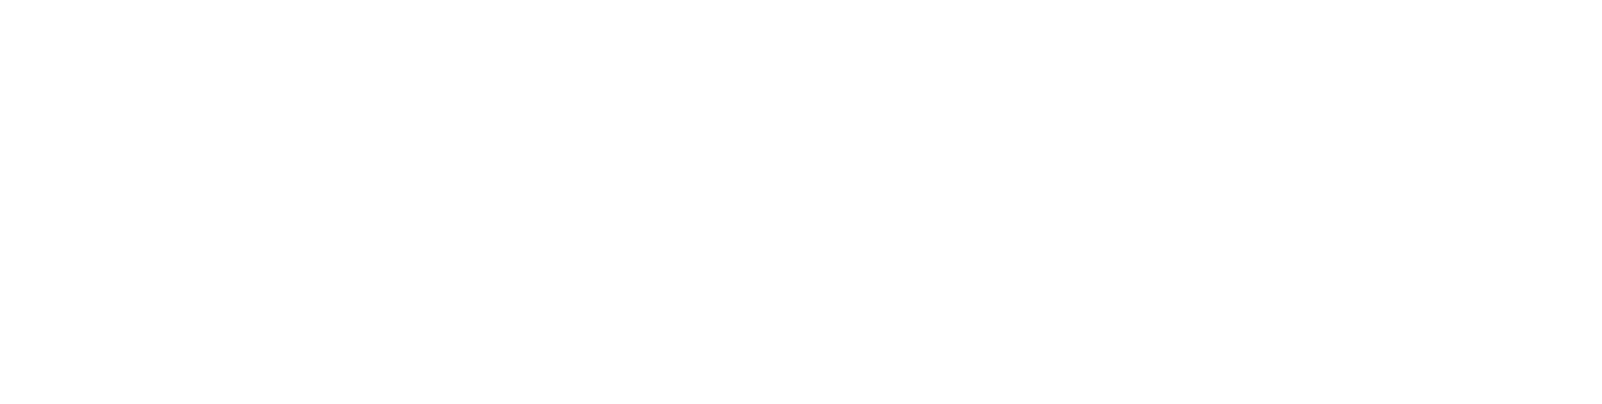 MongoDB logo large for dark backgrounds (transparent PNG)